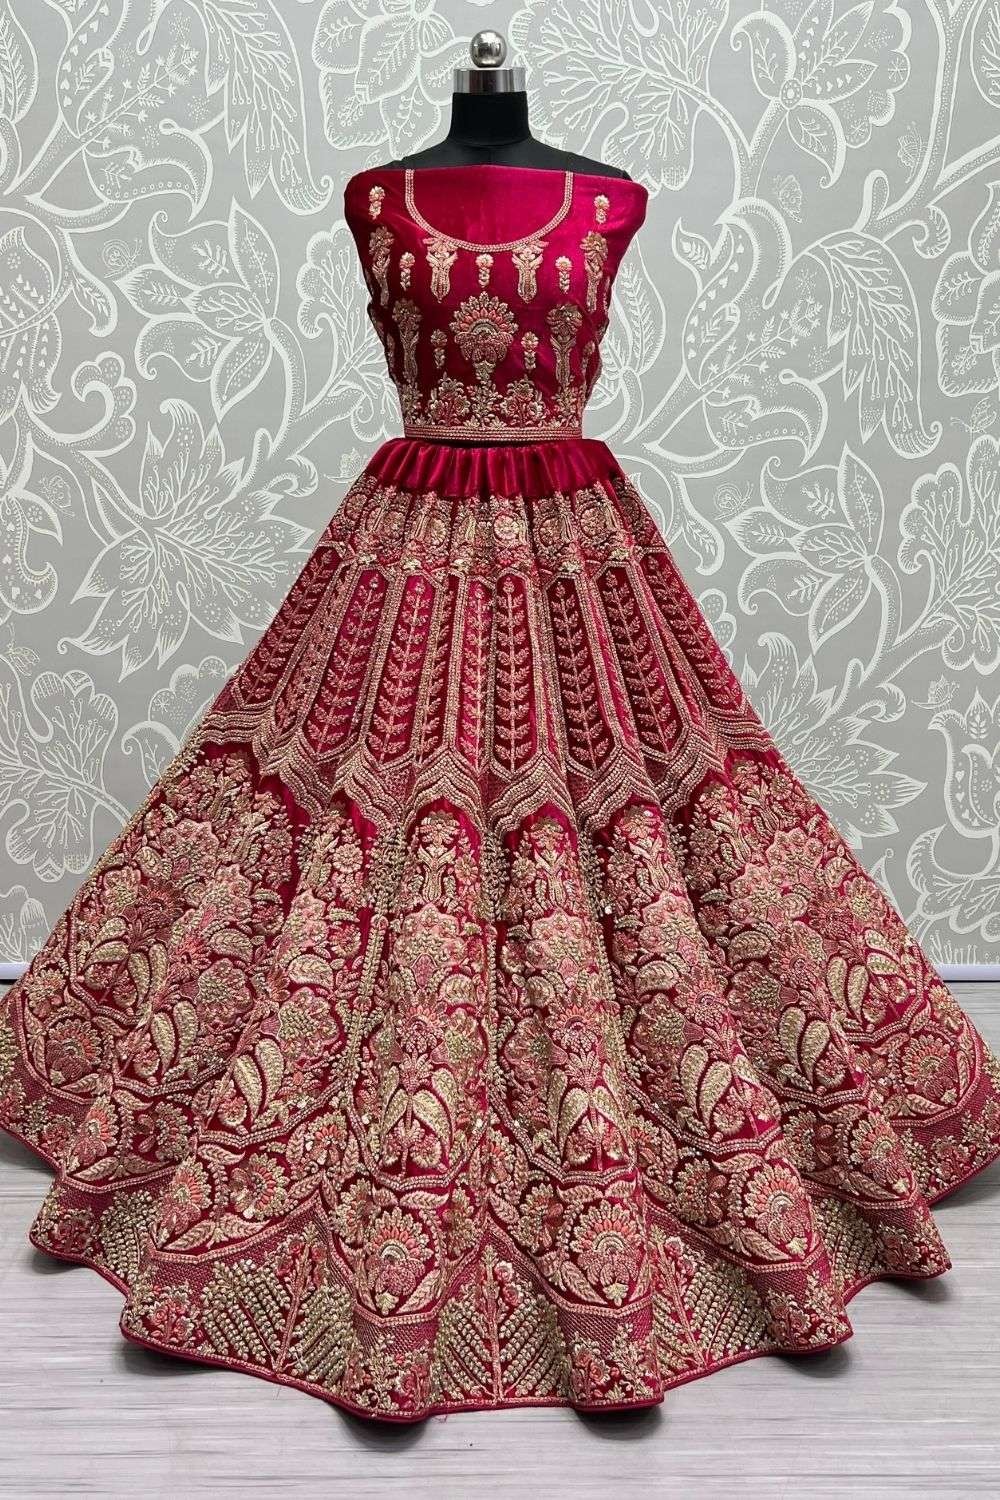 Rani Pink Bridal Wedding Lehenga Choli Indian Lengha Chunri Set Dress Sari  Saree | eBay